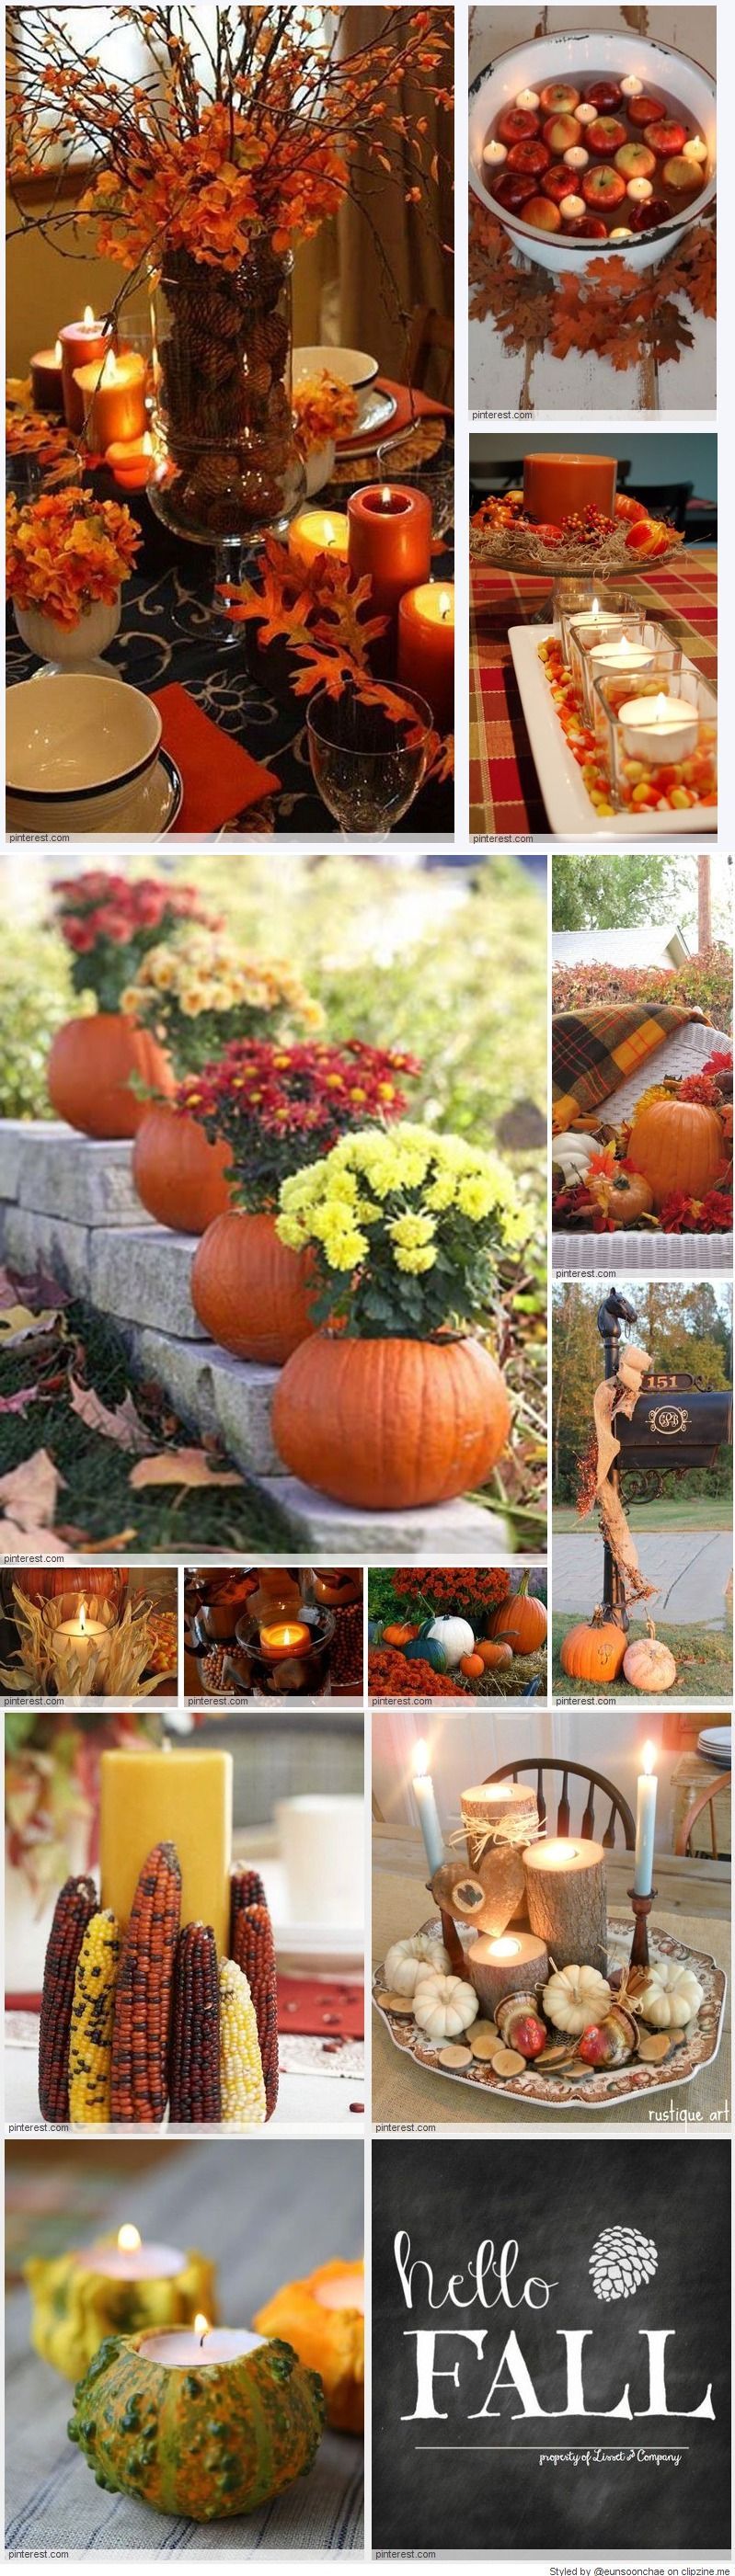 Fall Decorating Ideas